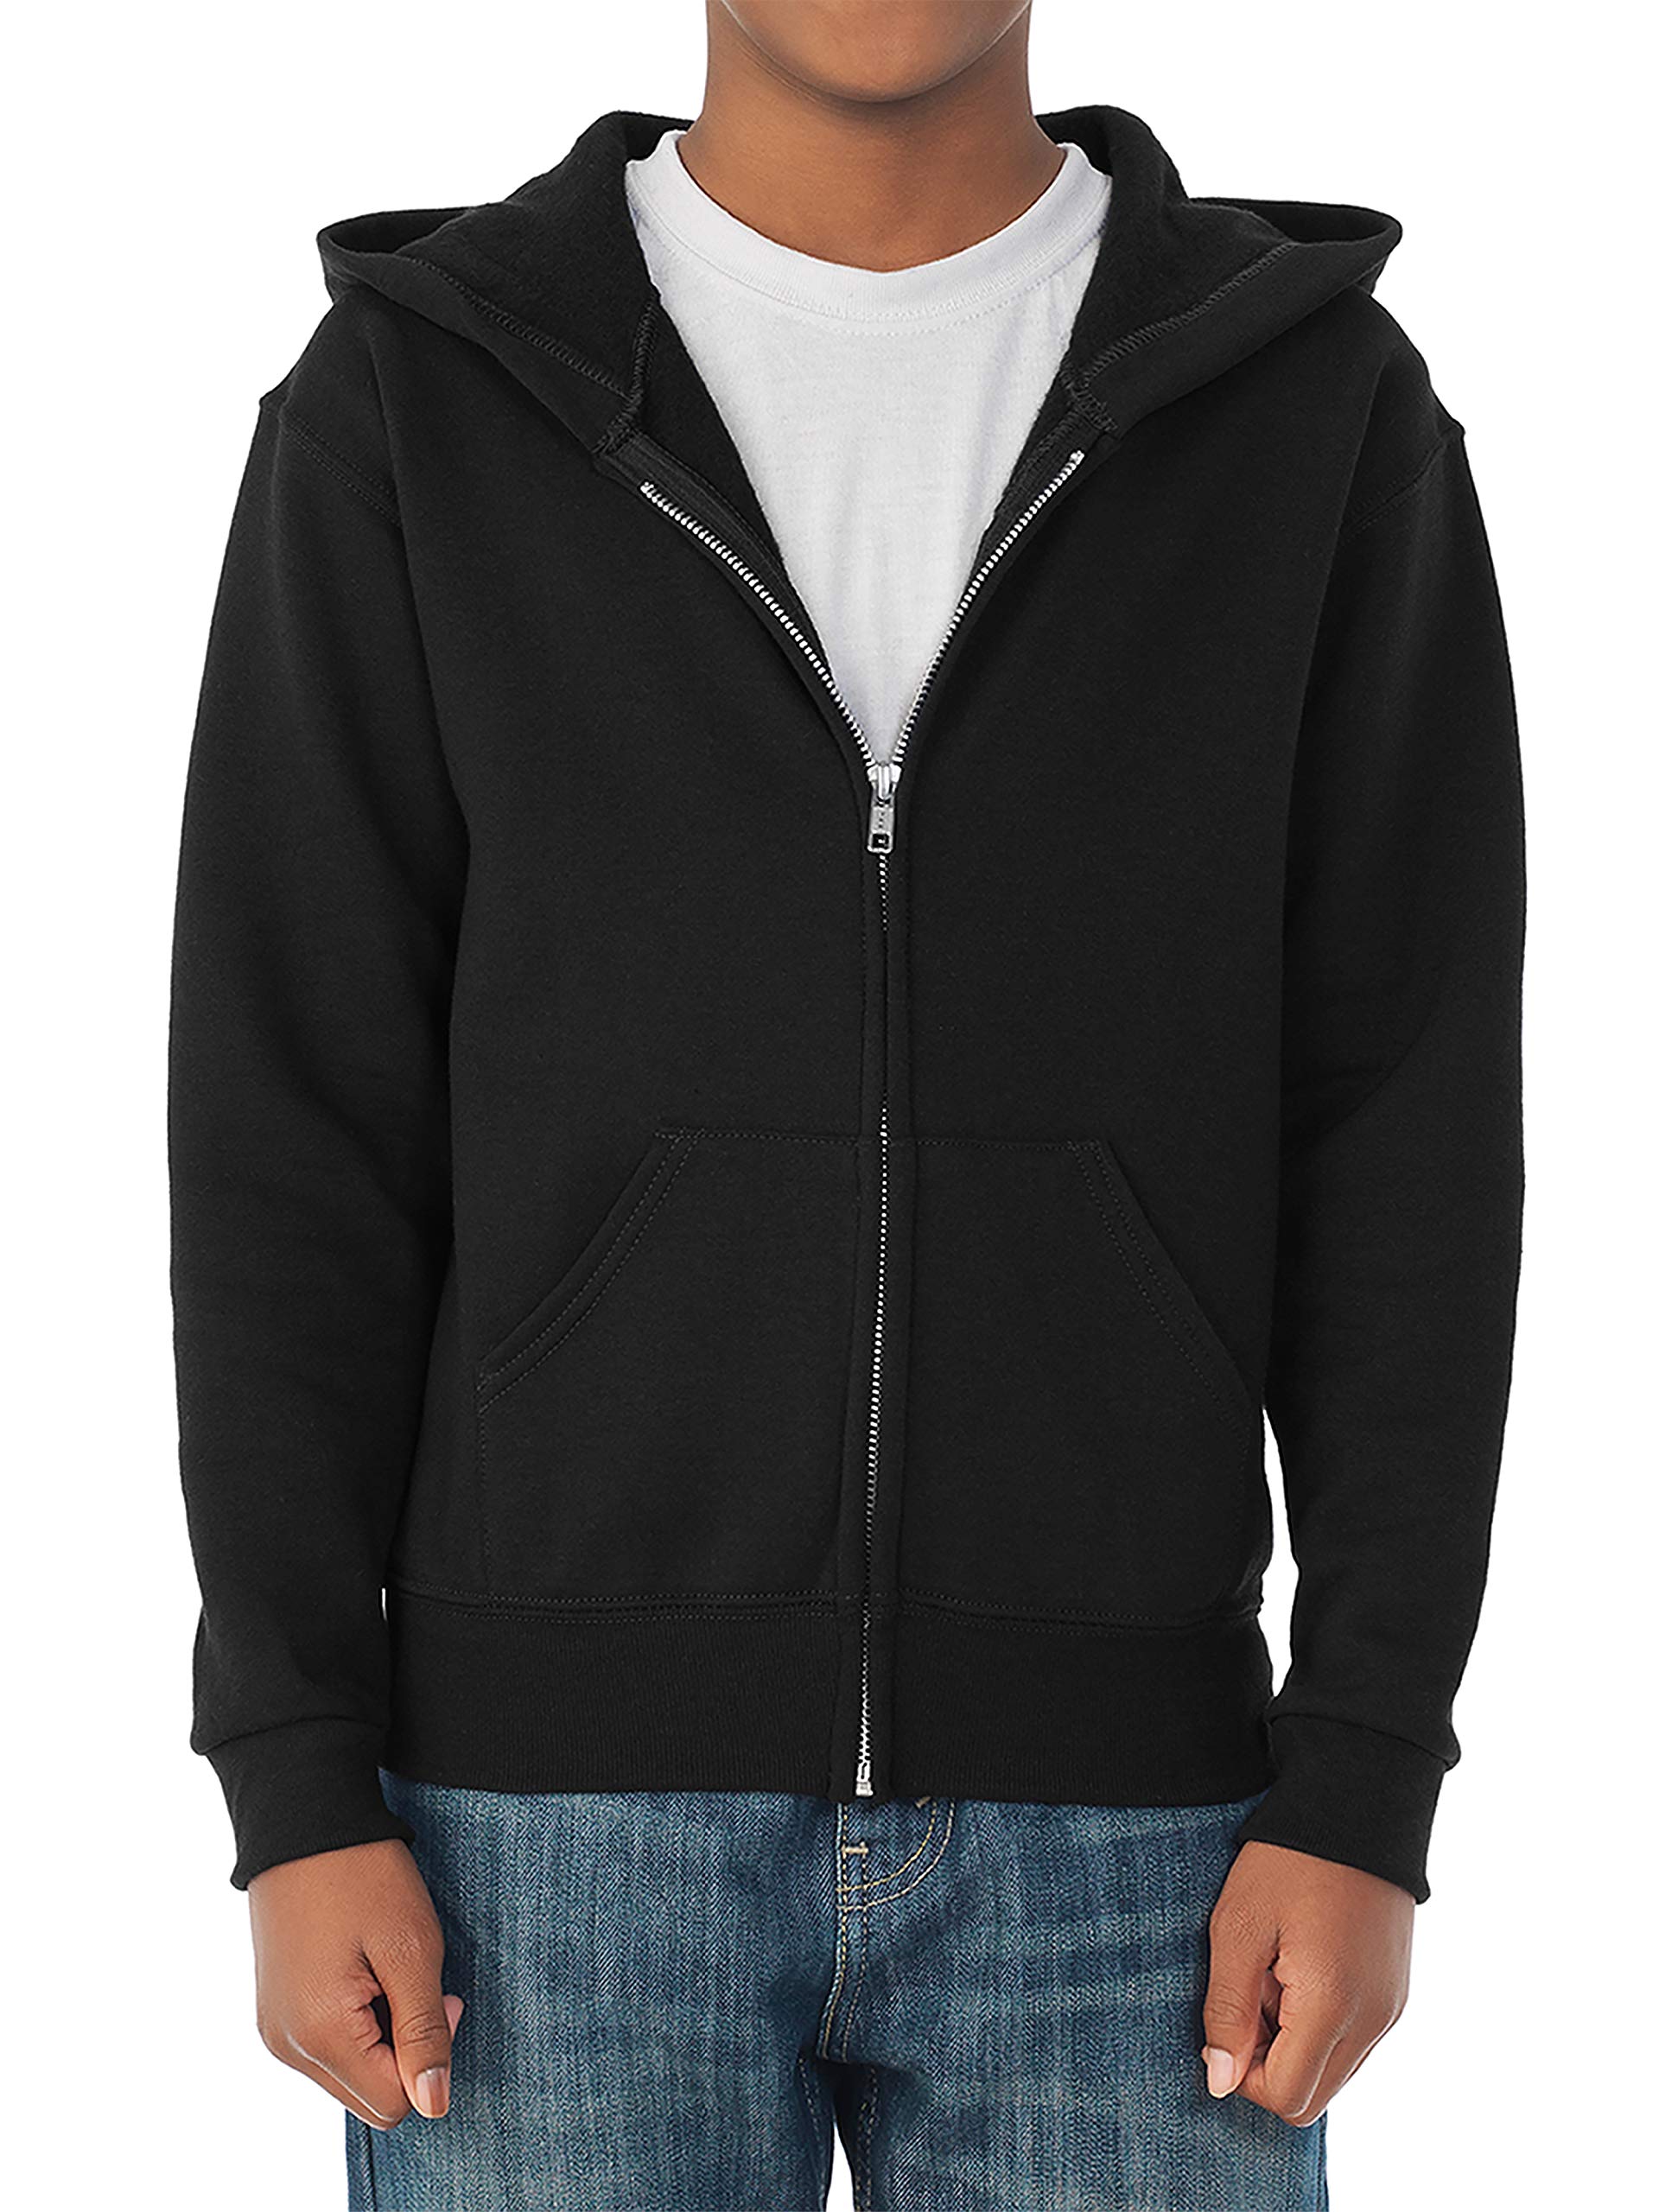 JERZEES Youth Nublend Fleece Sweatshirts & Hoodies, Cotton Blend, Sizes S-XL